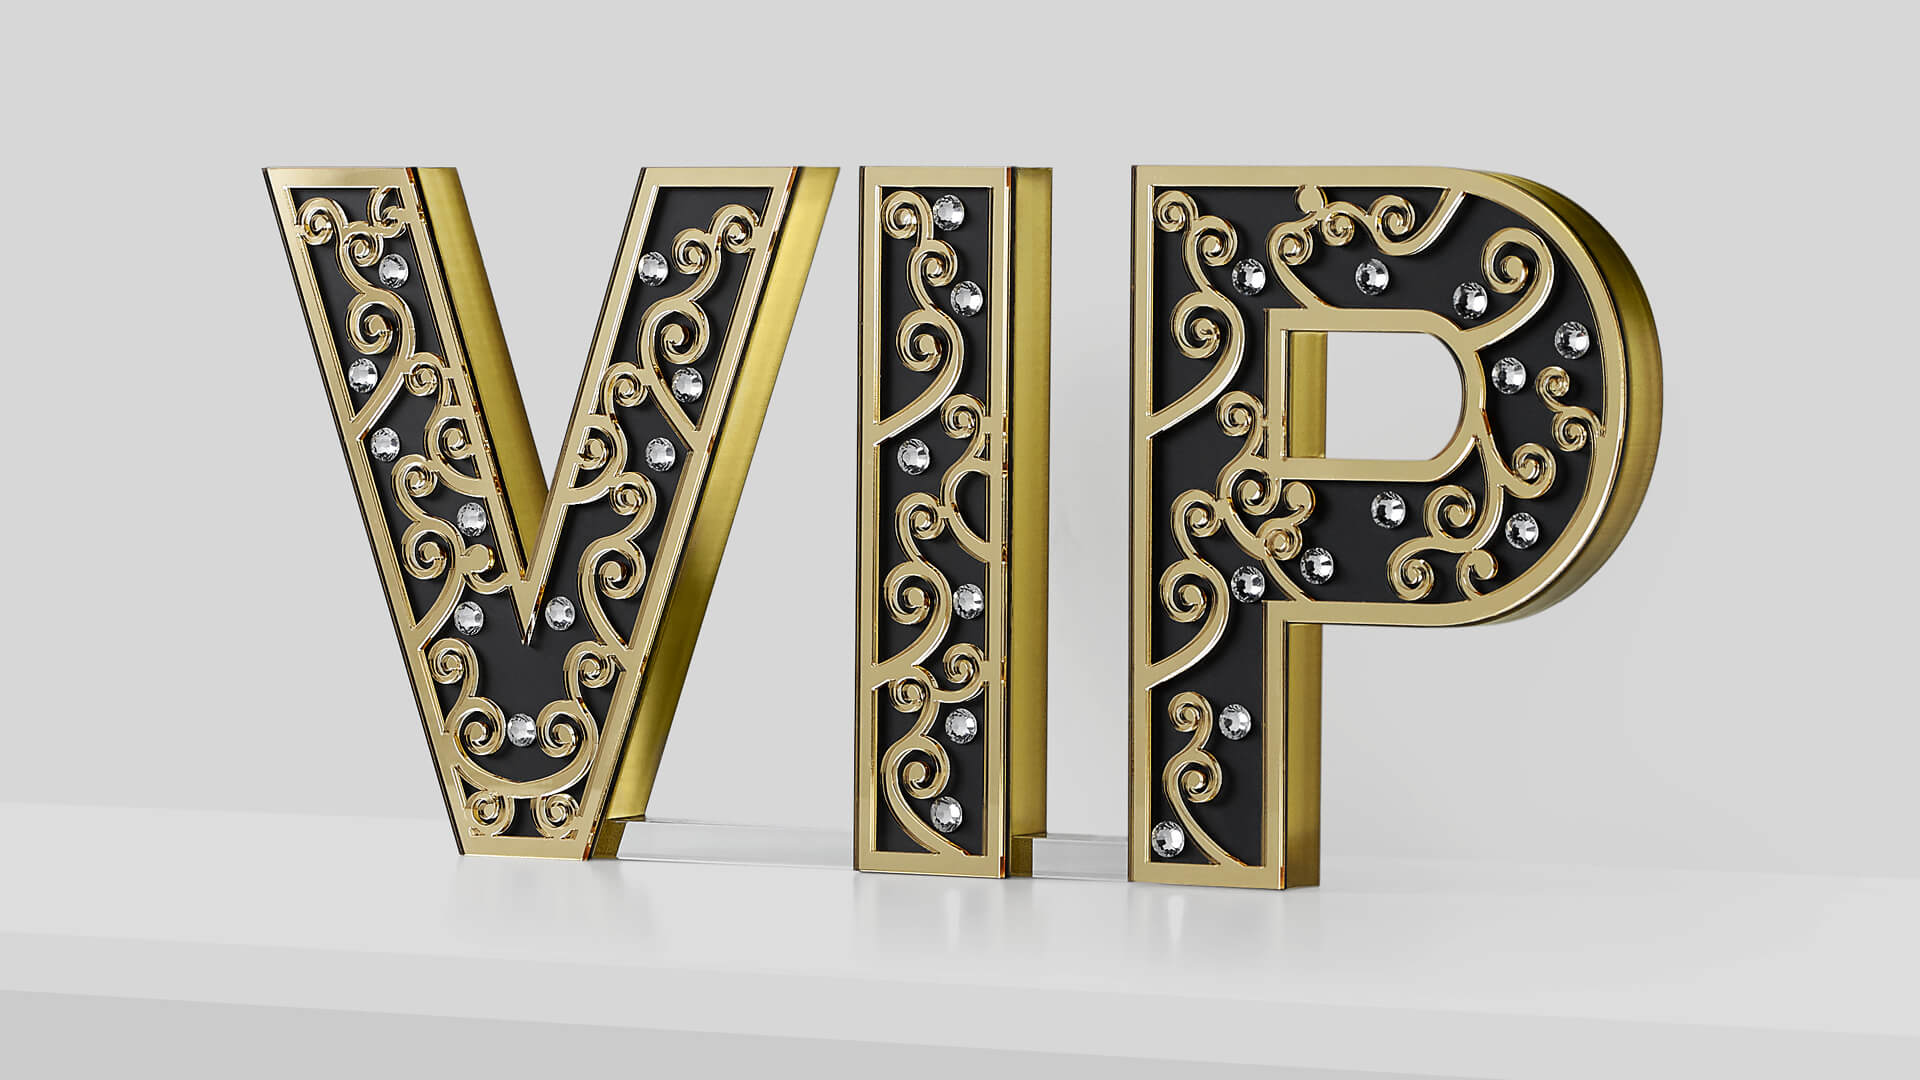 lettere vip - pretty-vip-letters-space-letters-vip-vip-letters-decorative-vip